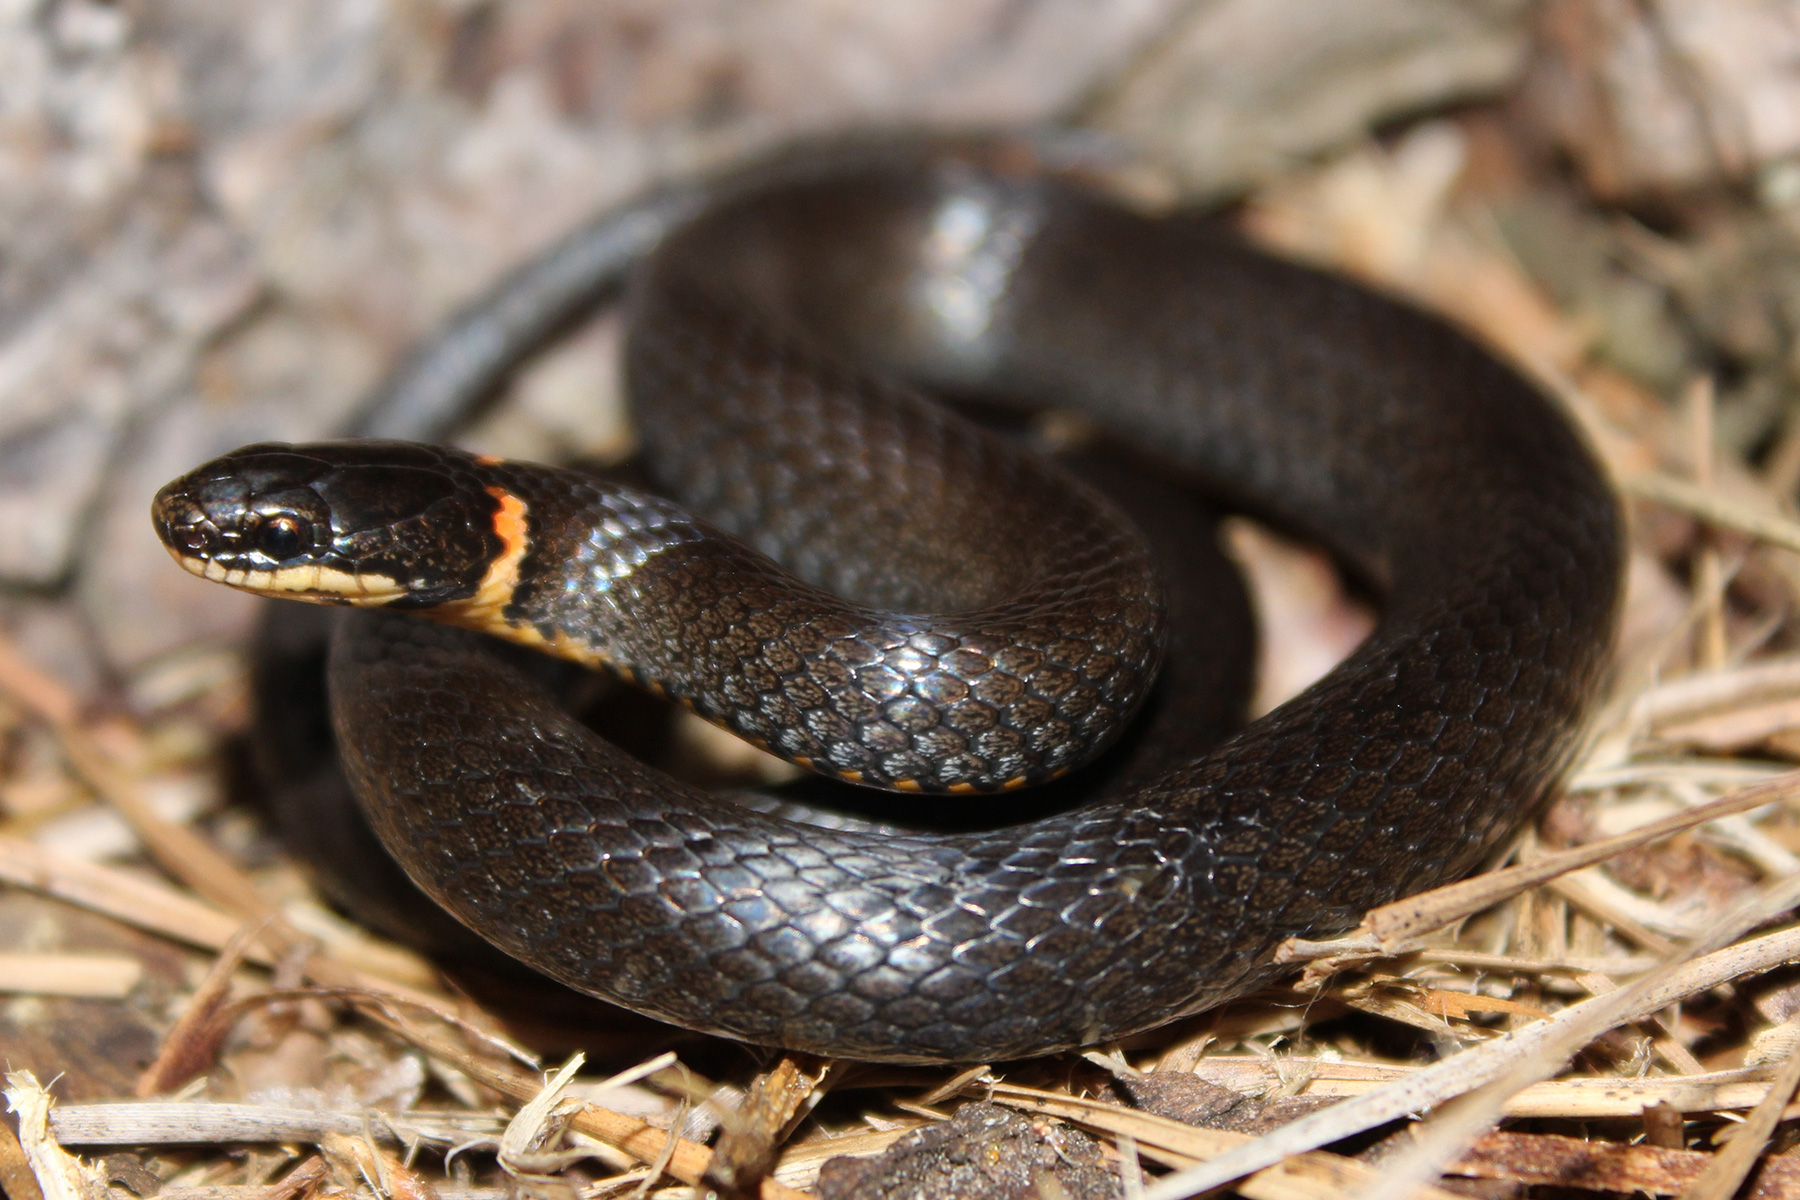 Thailand's Black and White Snakes | Thailand Snakes